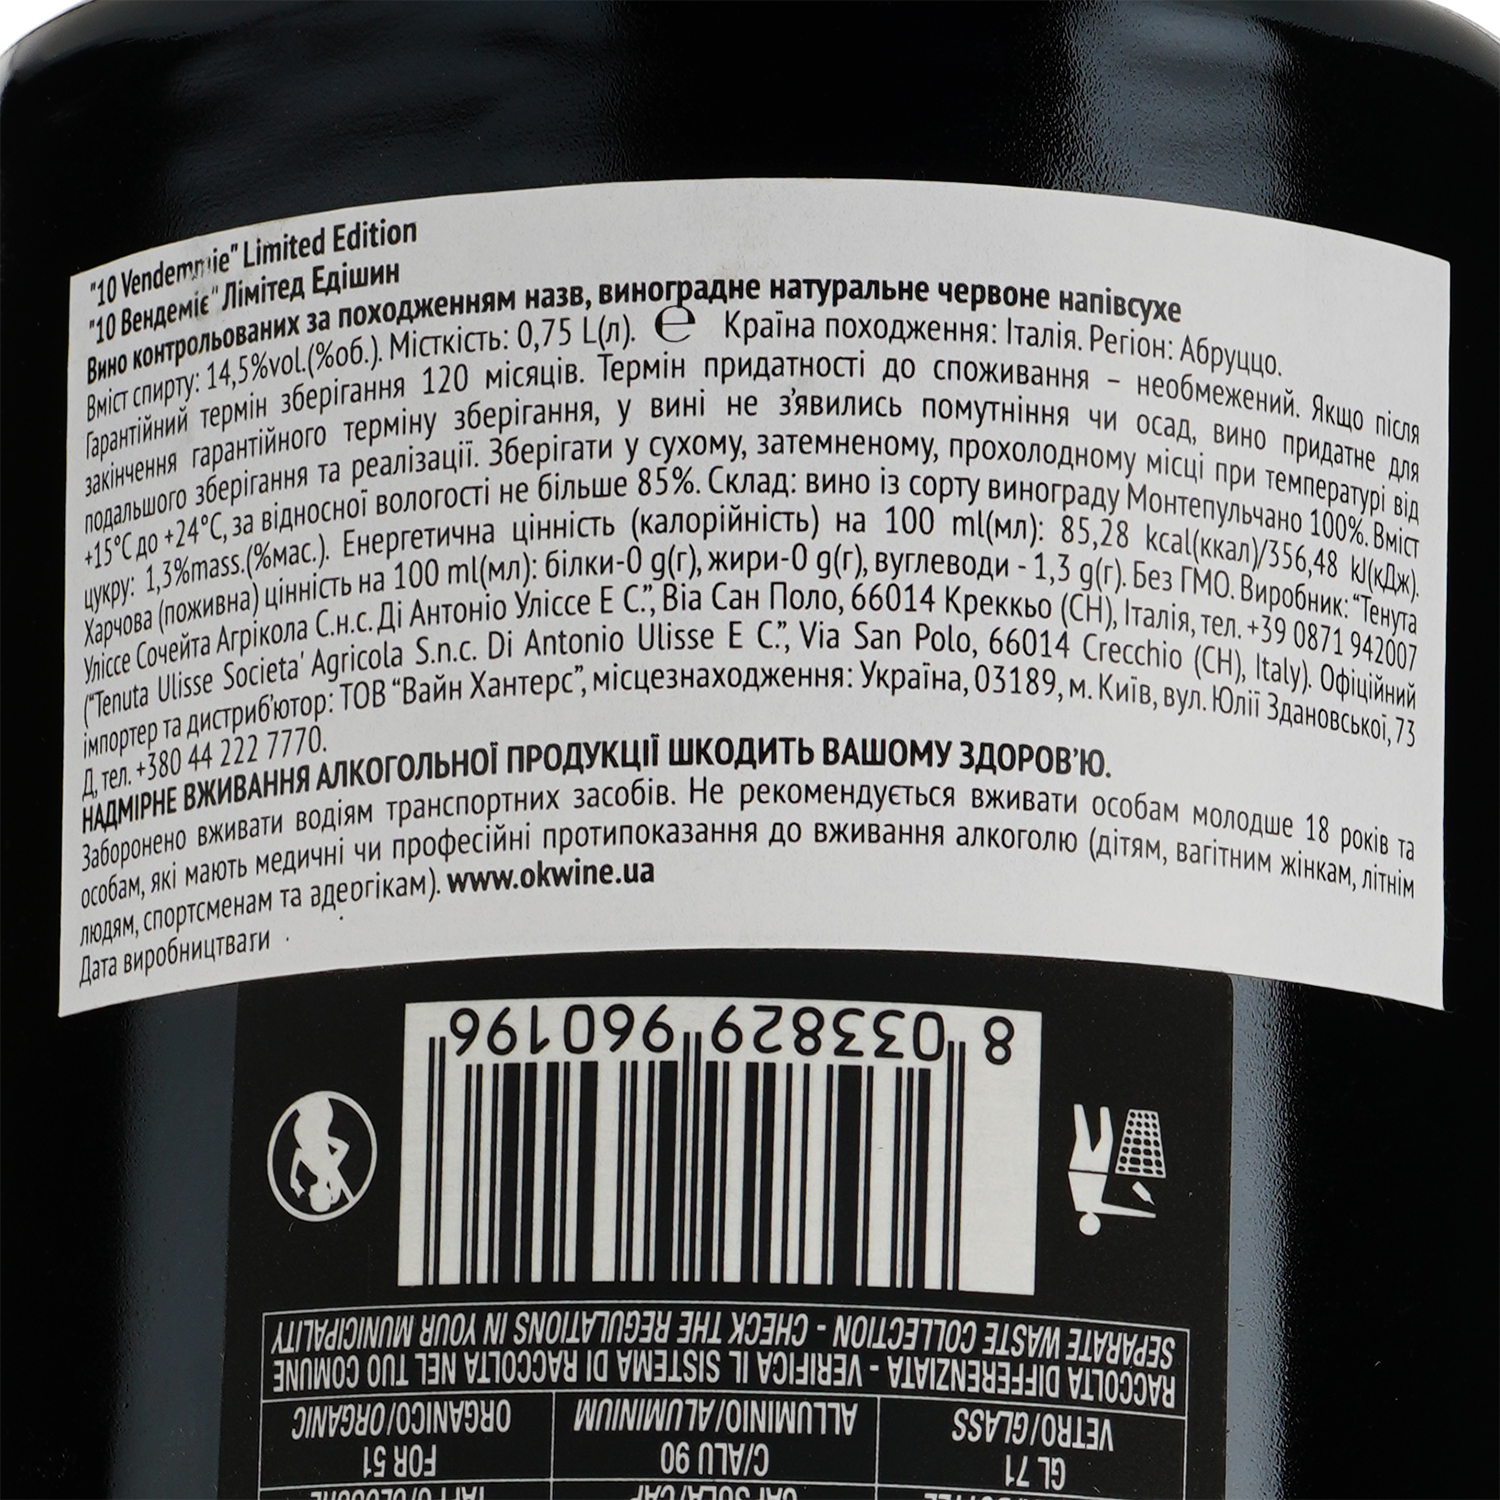 Вино Limited Edition 10 Vendemmie, червоне, напівсолодке, 14,5%, 0,75 л - фото 3